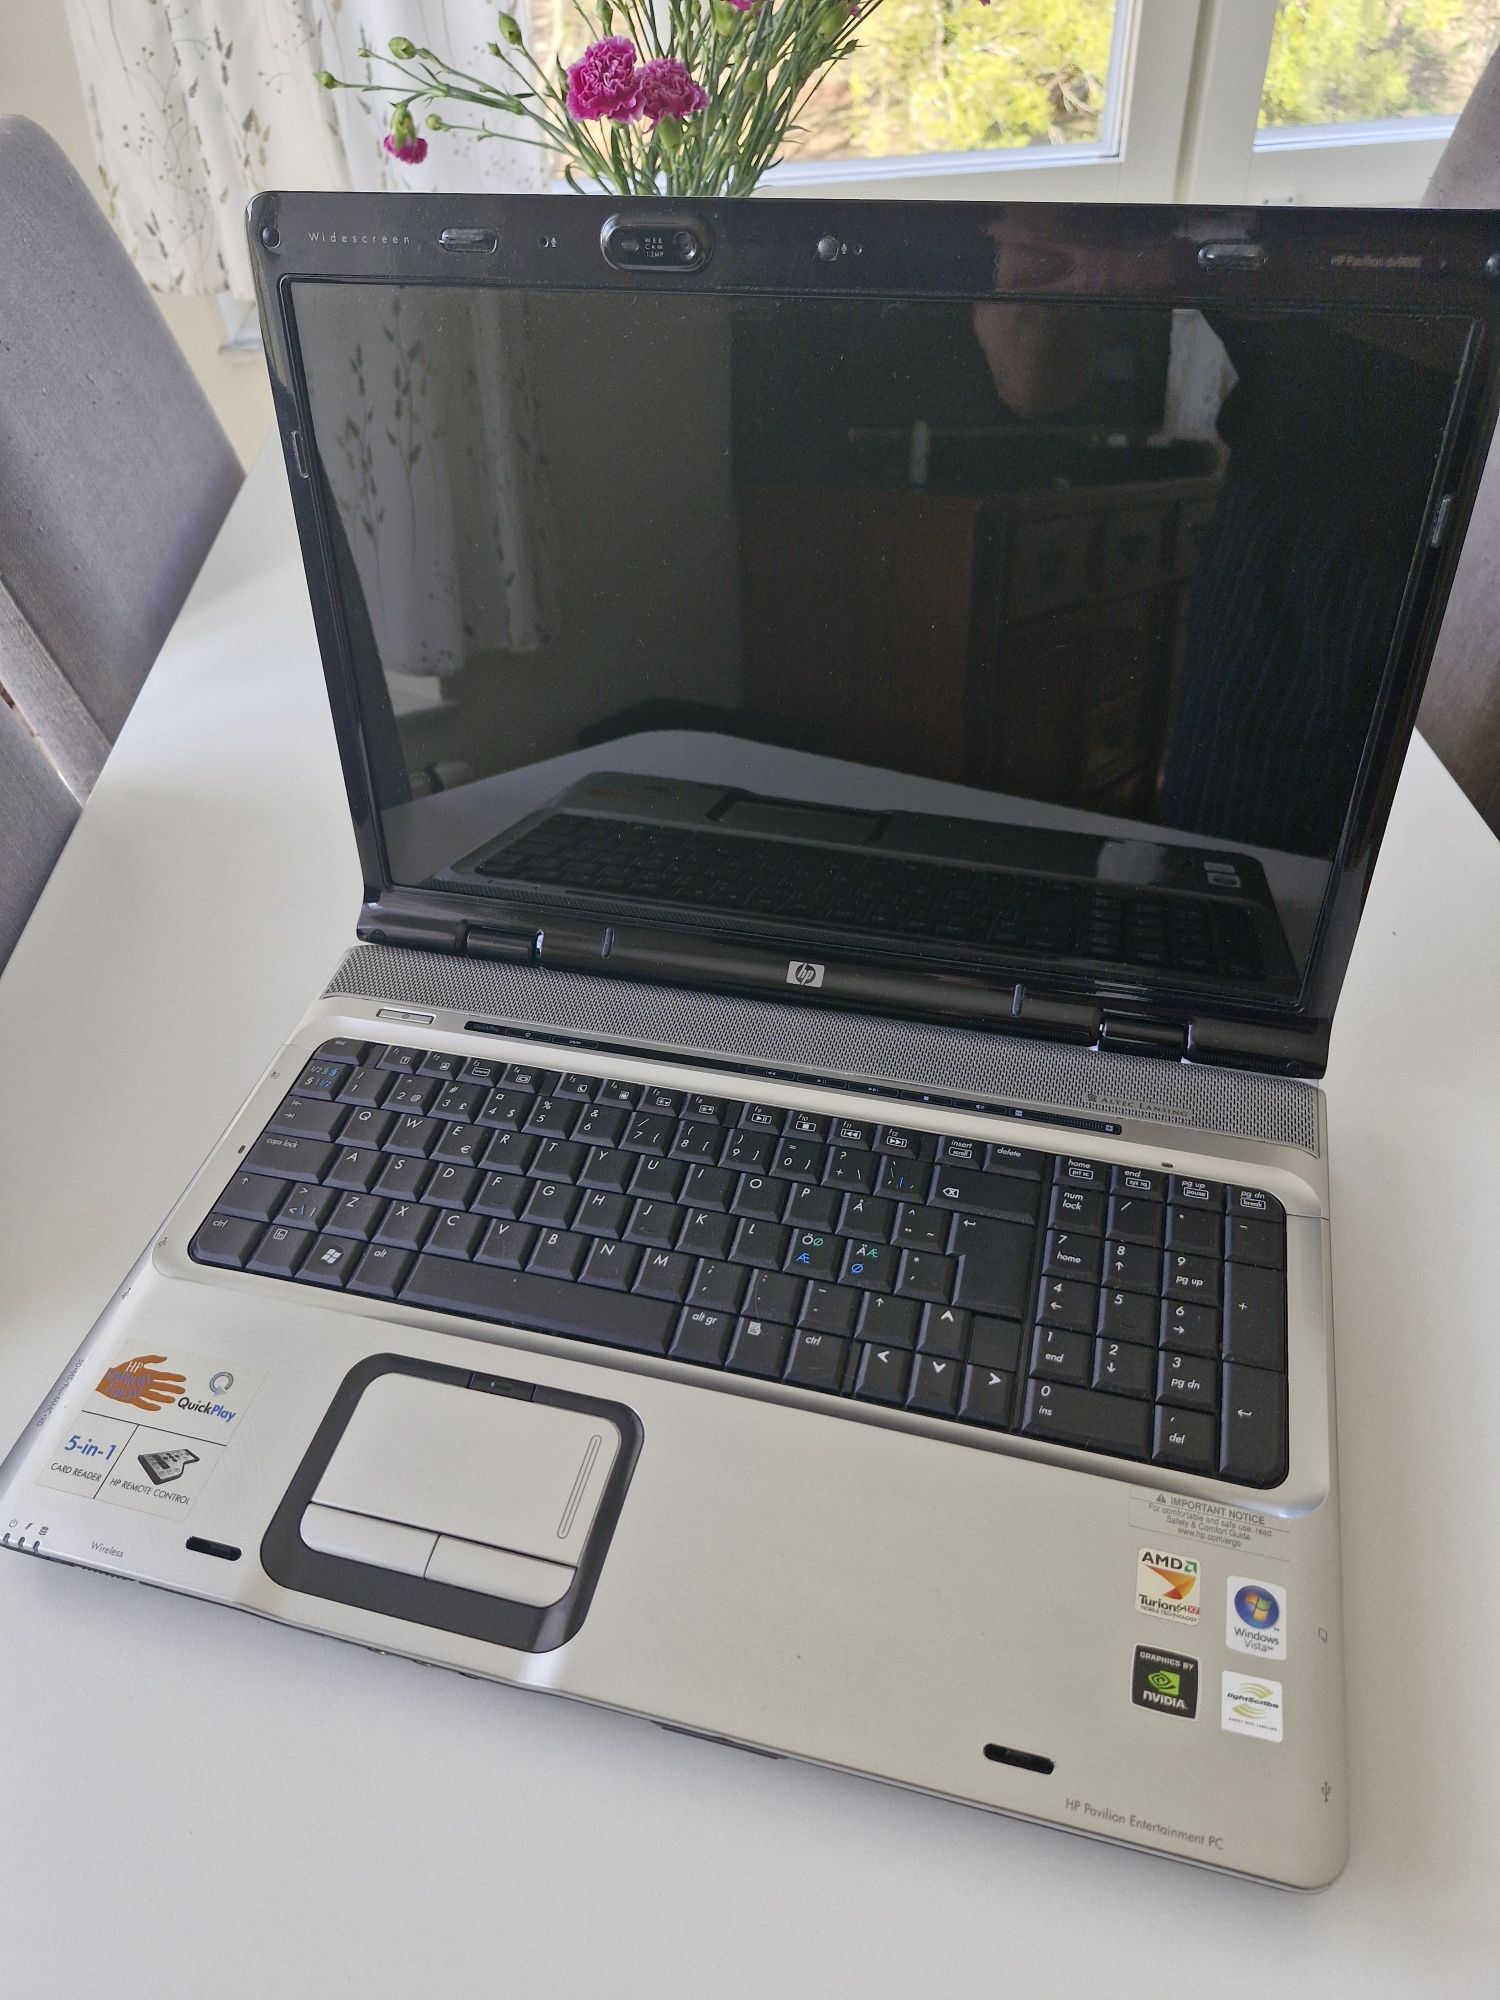 Laptop HP pavilion dv9000